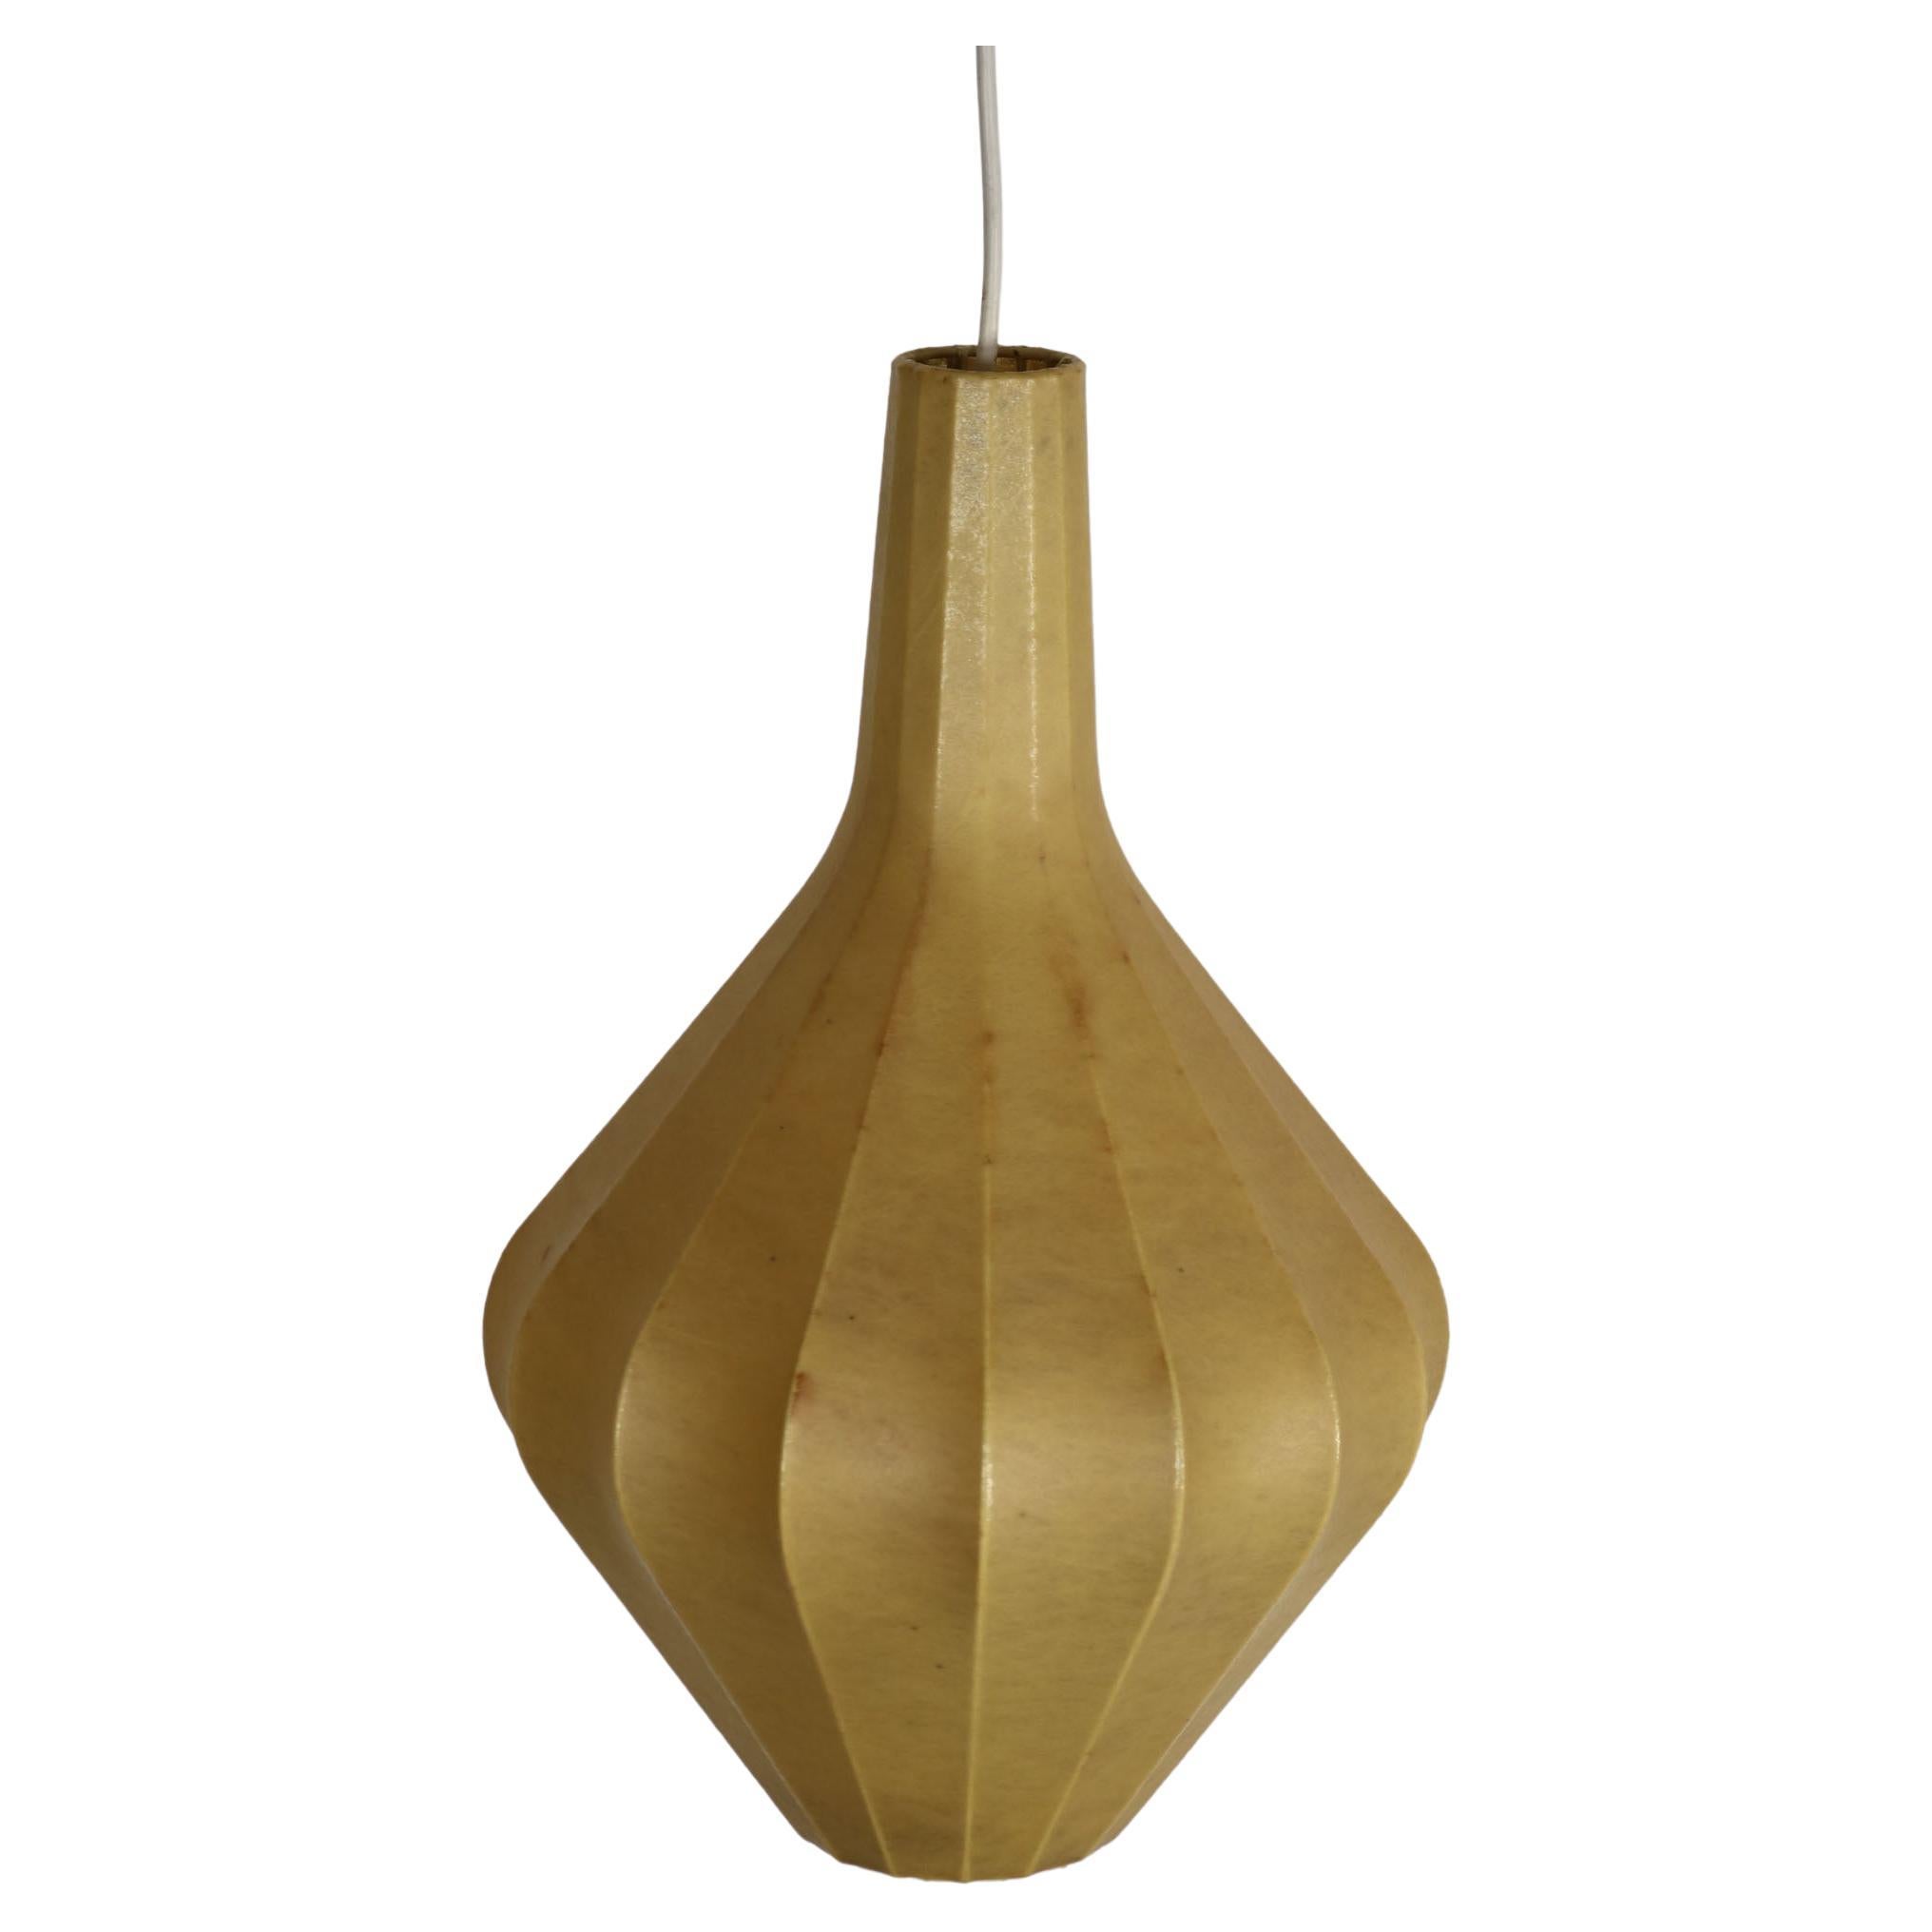 Vintage pendant lamp by Friedel Wauer for Cocoon Leuchten International, 1960